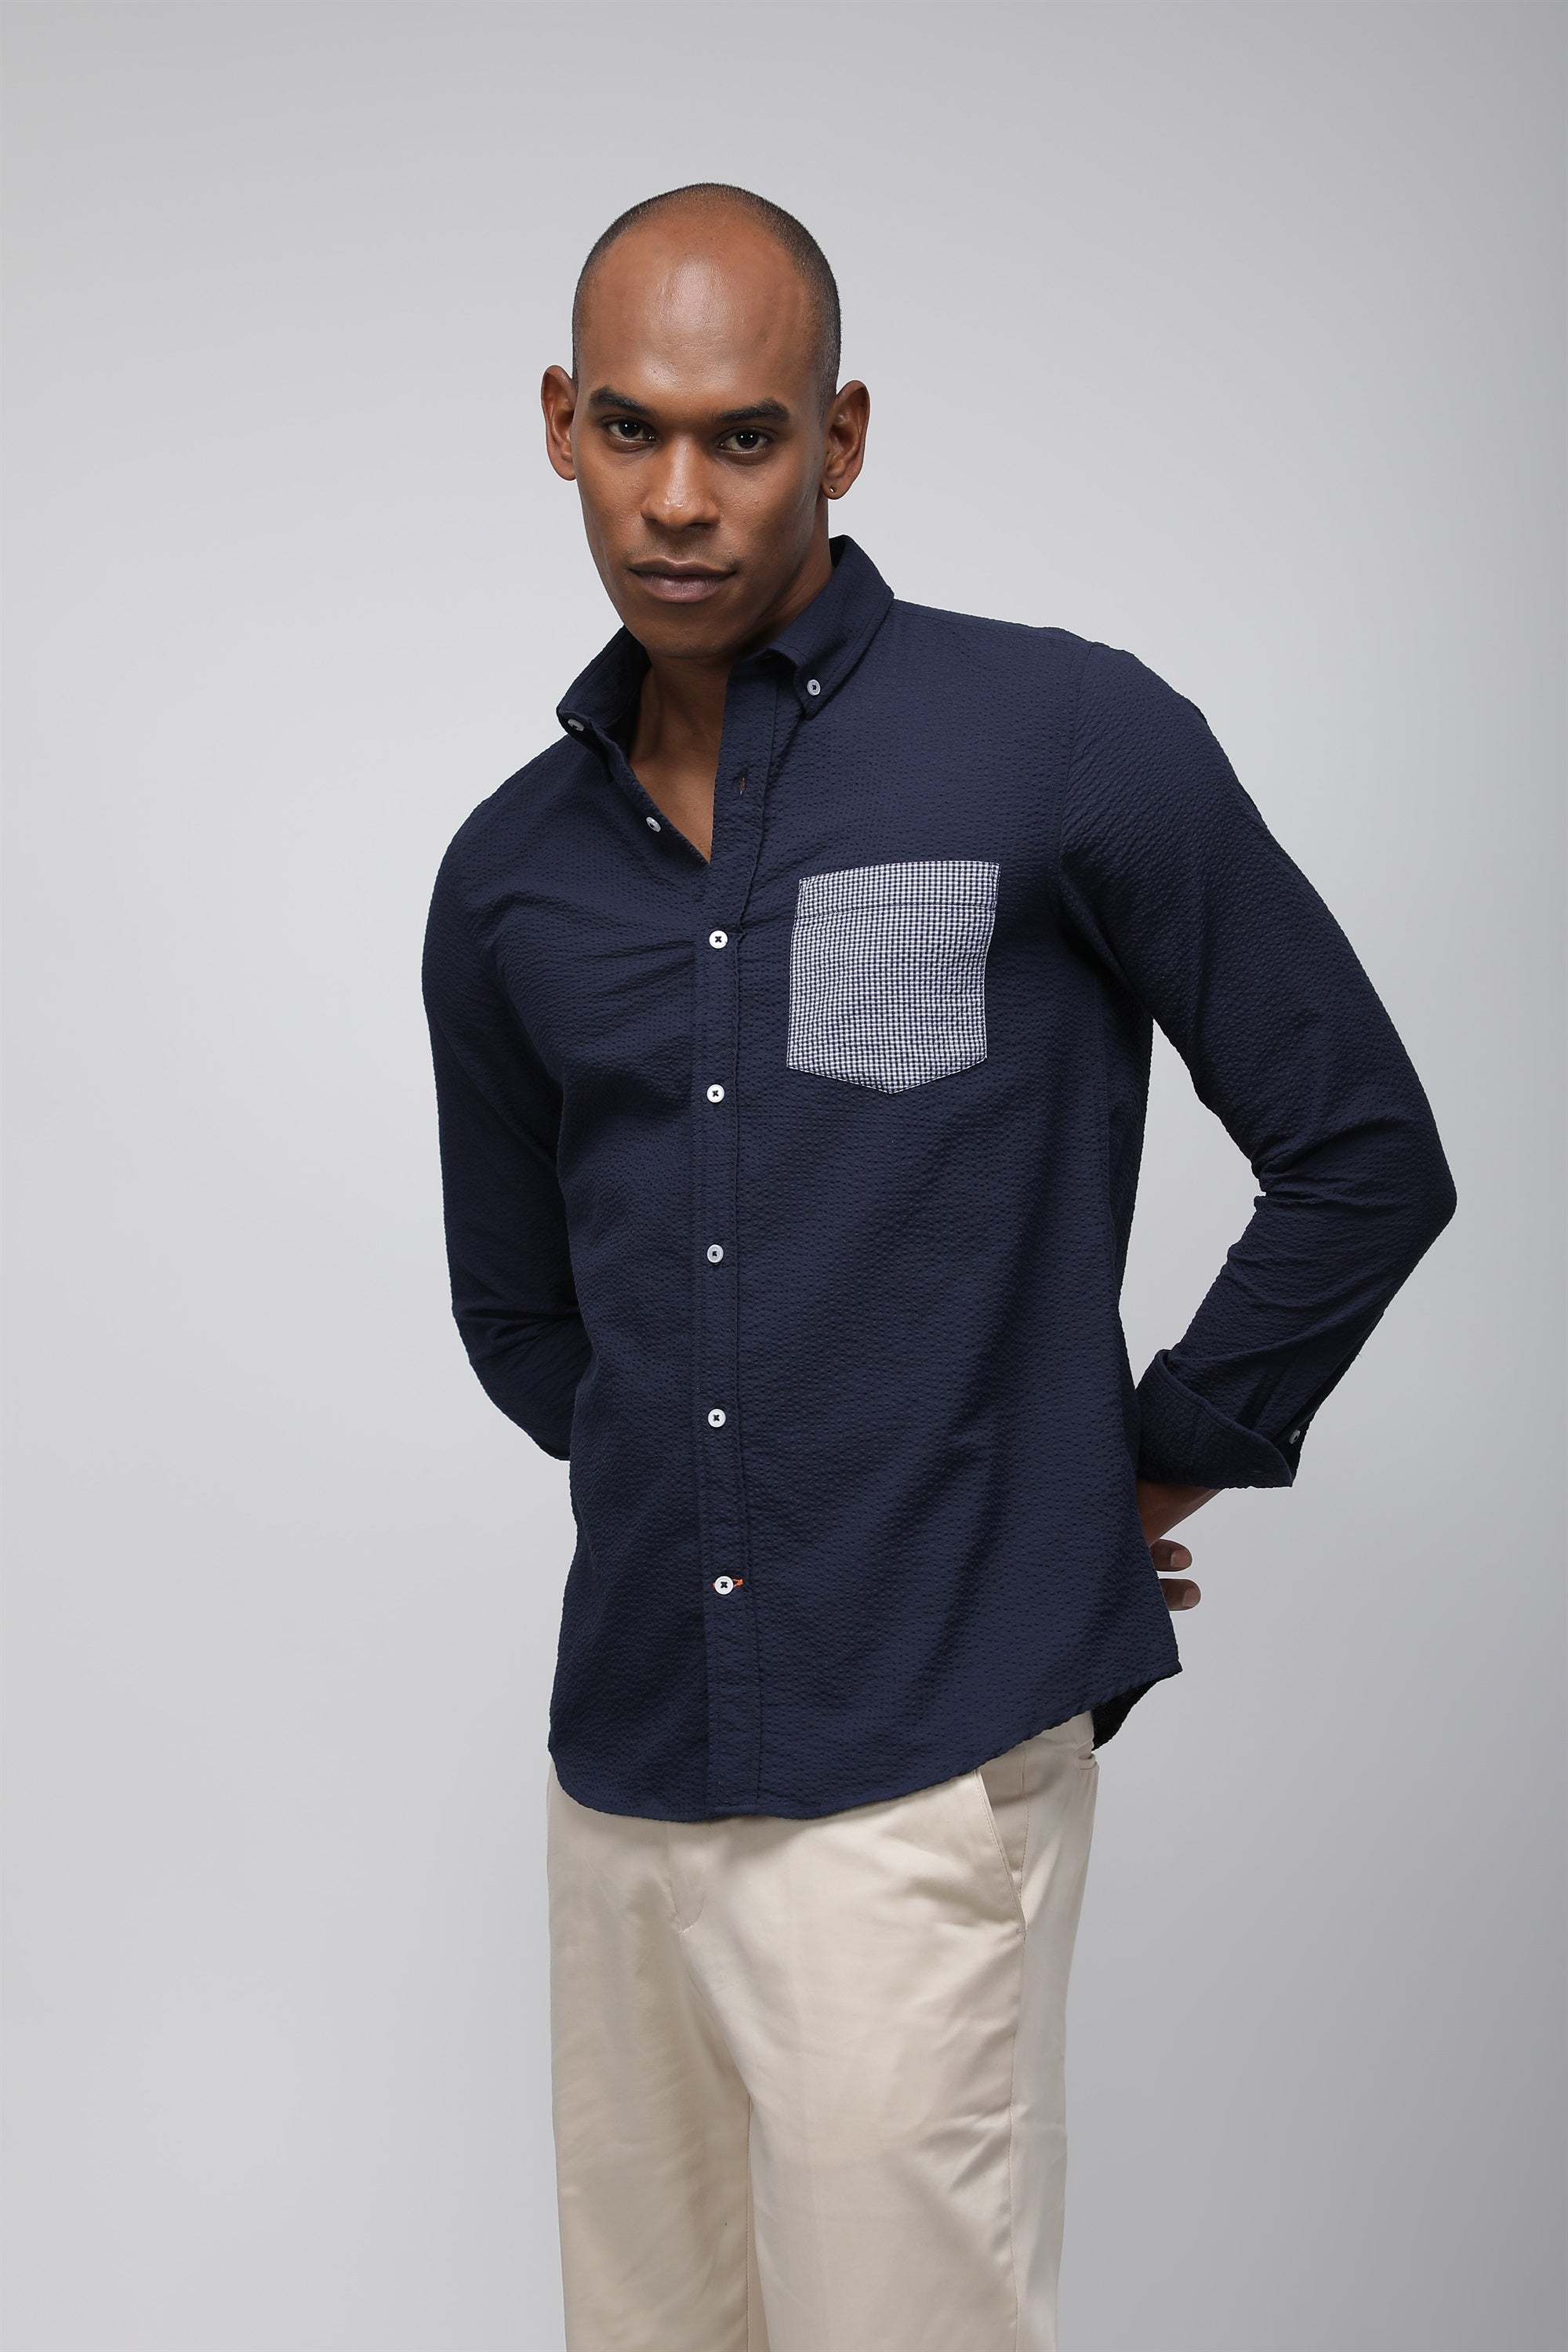 Bare Brown Seersucker Cotton Shirt, Slim Fit with Full Sleeves - Navy